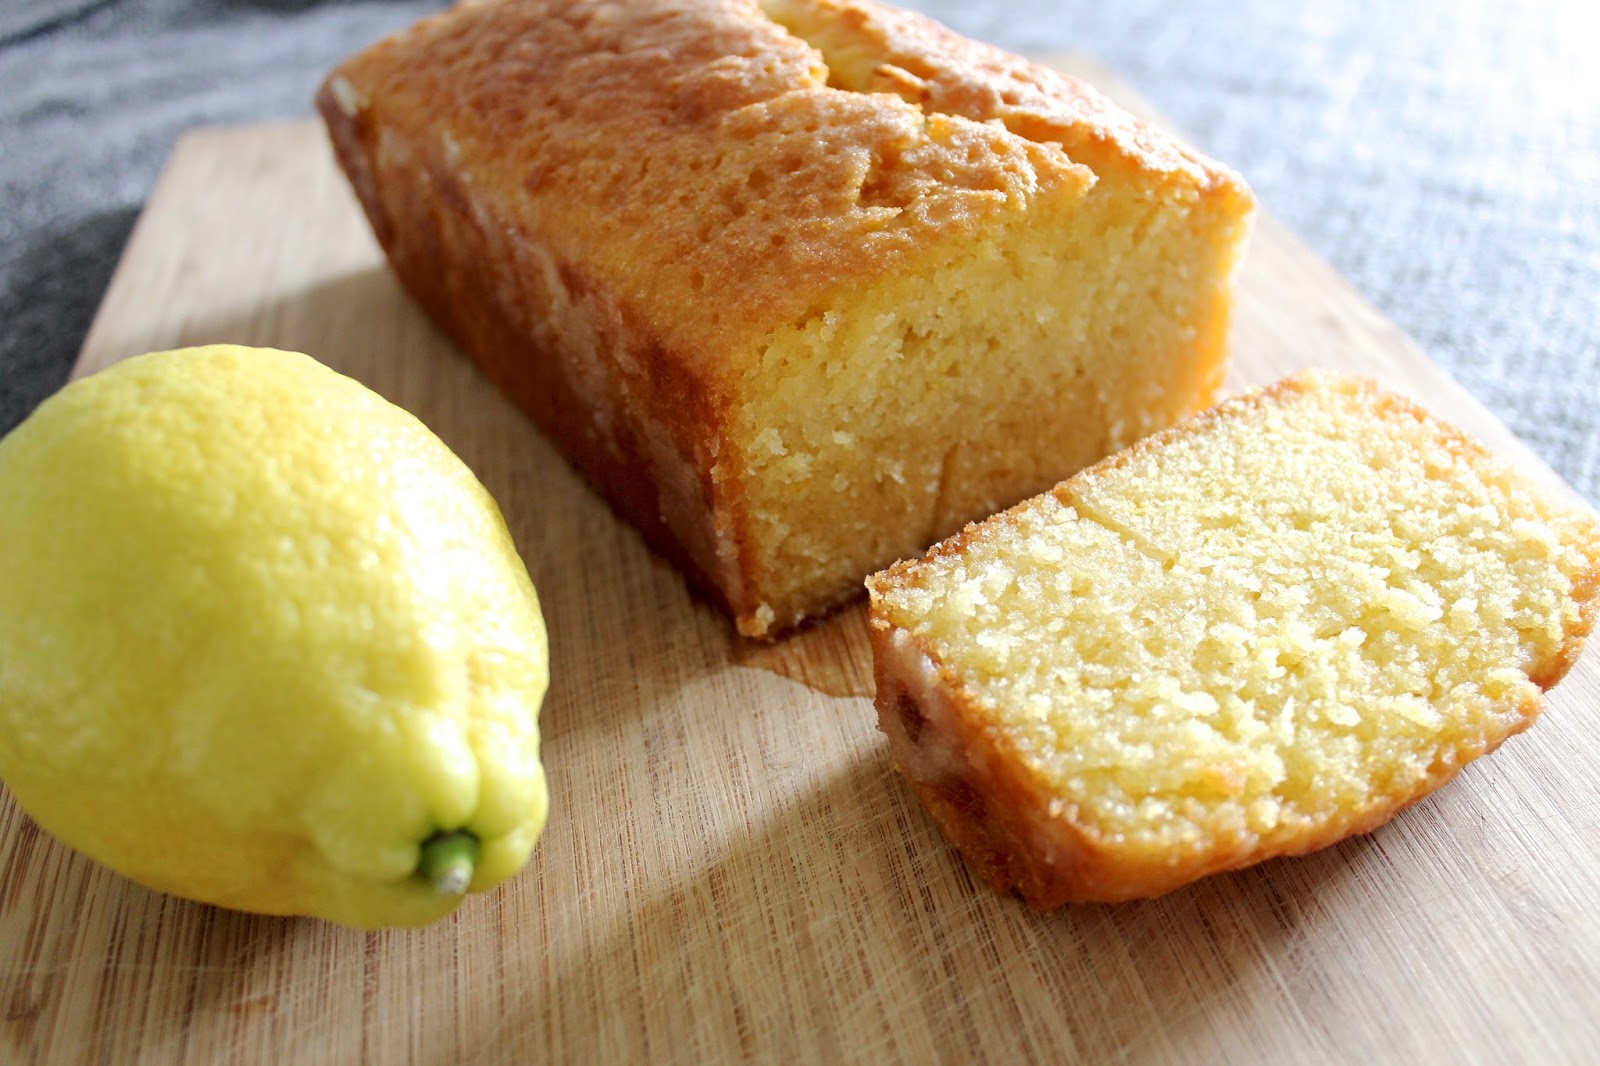 lemon drizzle cake recipe baking bake cake loaf blog blogger blogger bbloggers lifestyle kitchen inspiration cooking sunday citrus kirstie pickering instagram